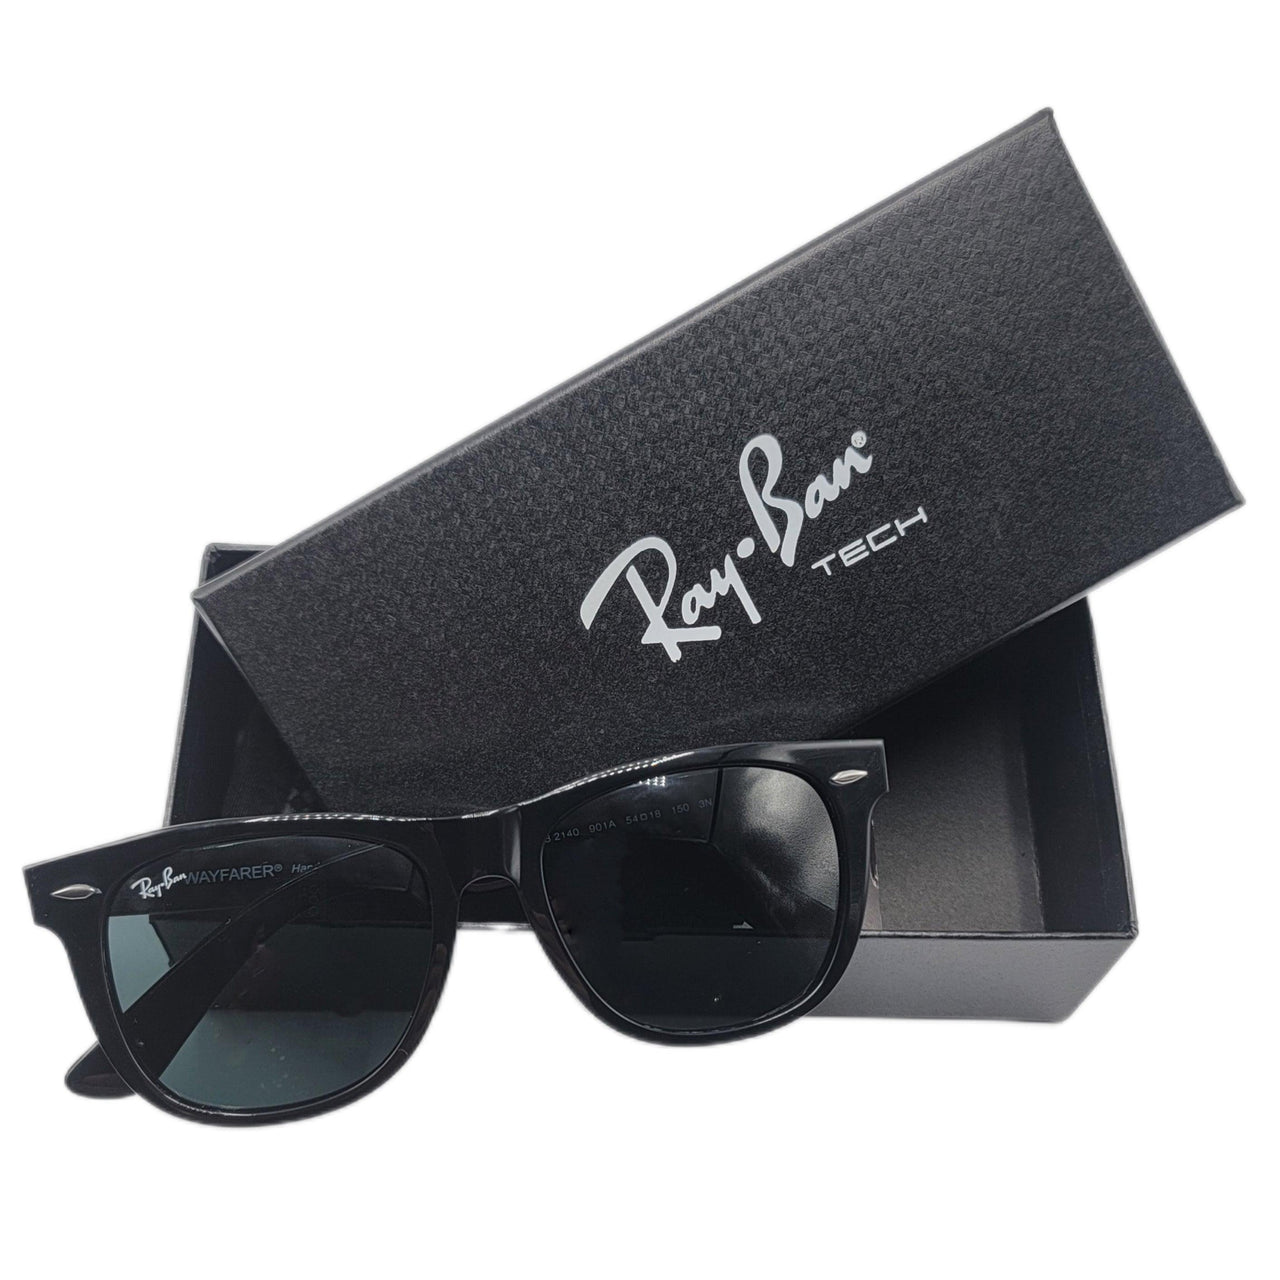 The Bag Couture Sunglasses Ray Ban Wayfarer Sunglasses BLGR